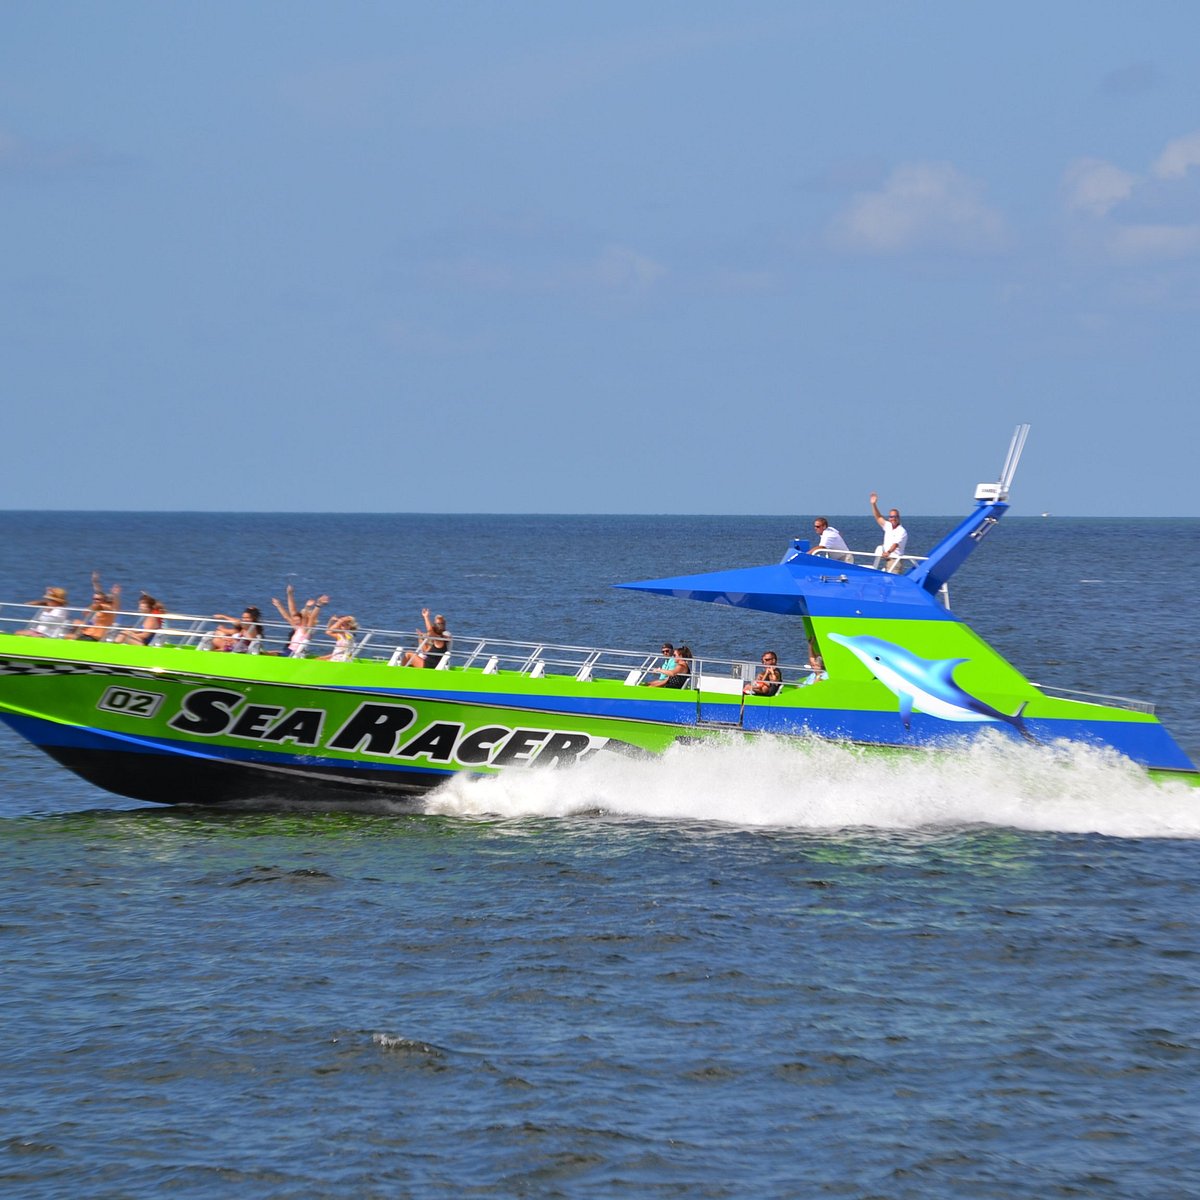 Sea racing